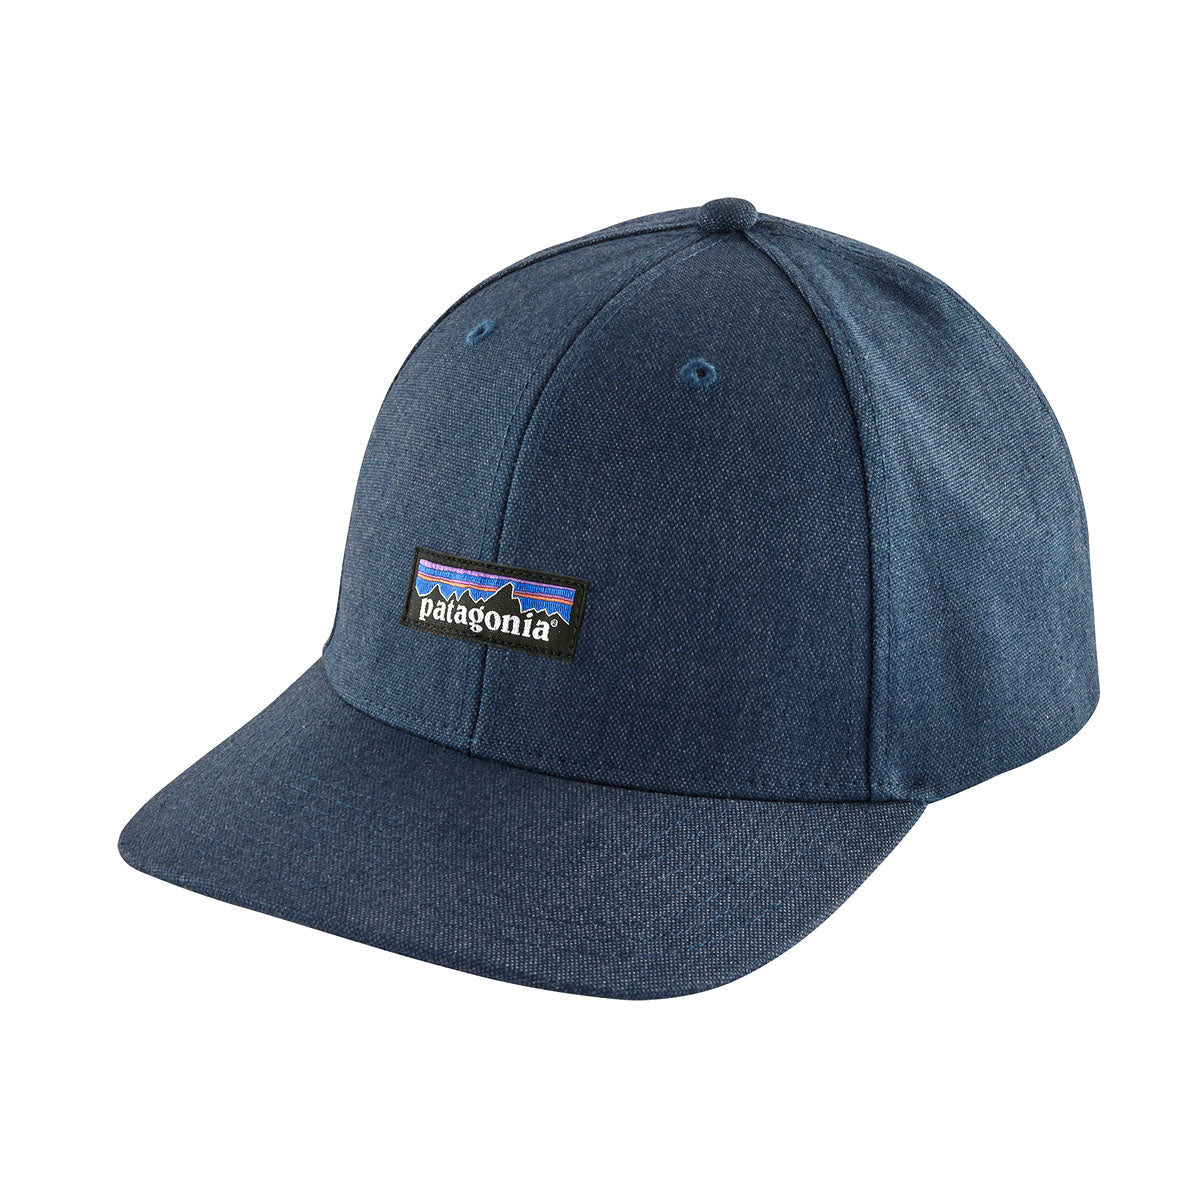 Starter Starter Cliff Out Snapback Hat Light Blue Os / Light Blue Mens Headwear